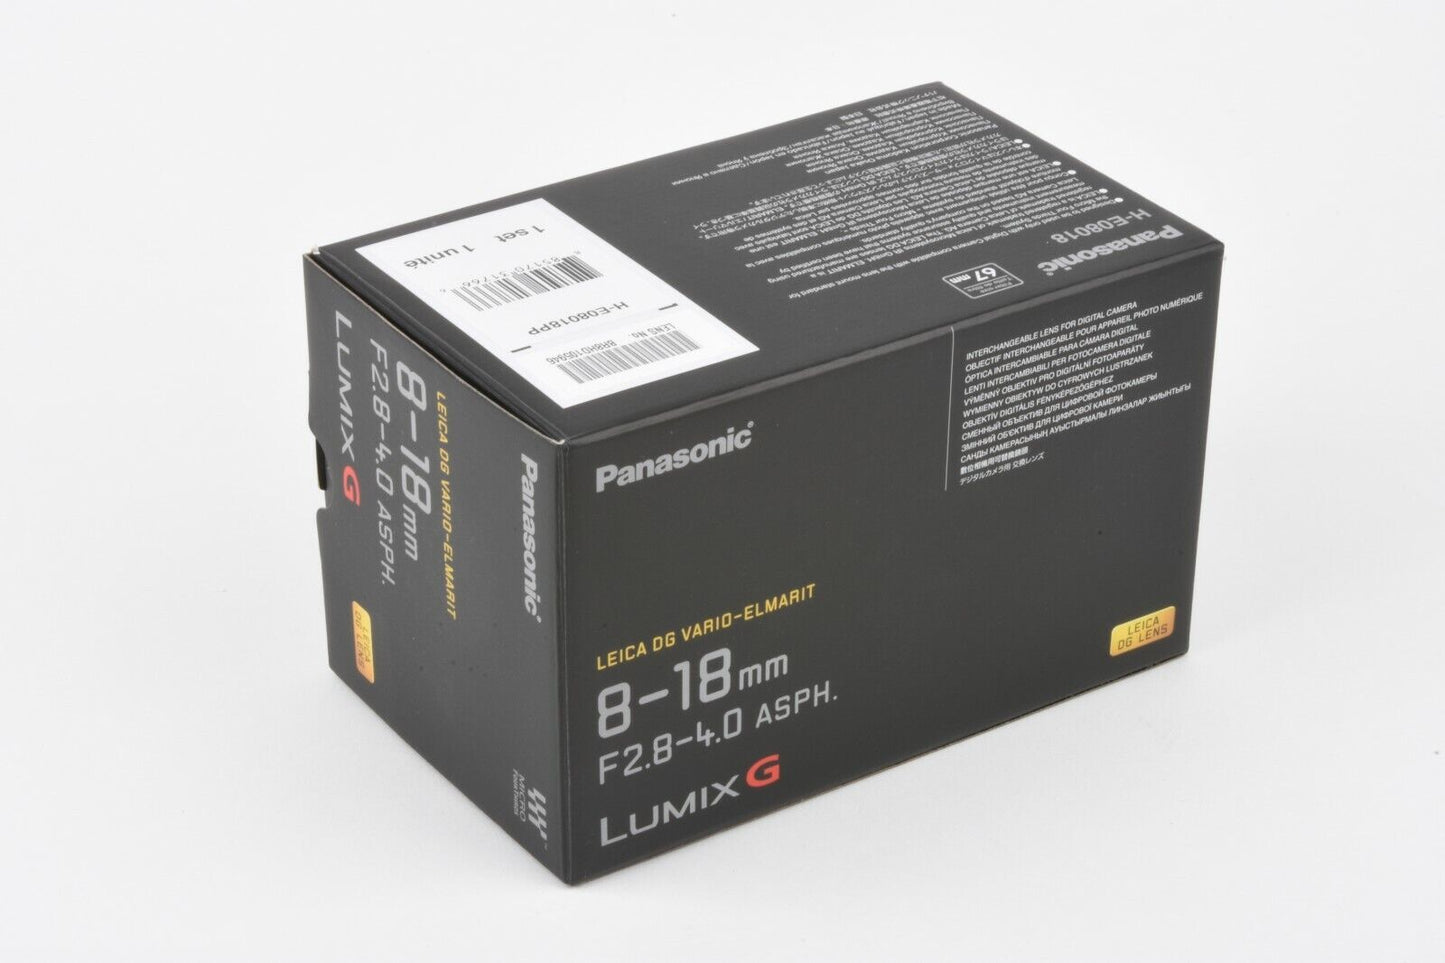 MINT BOXED USA PANASONIC LEICA DG 8-18mm F2.8-4 ASPH. LENS LUMIX G, COMPLETE